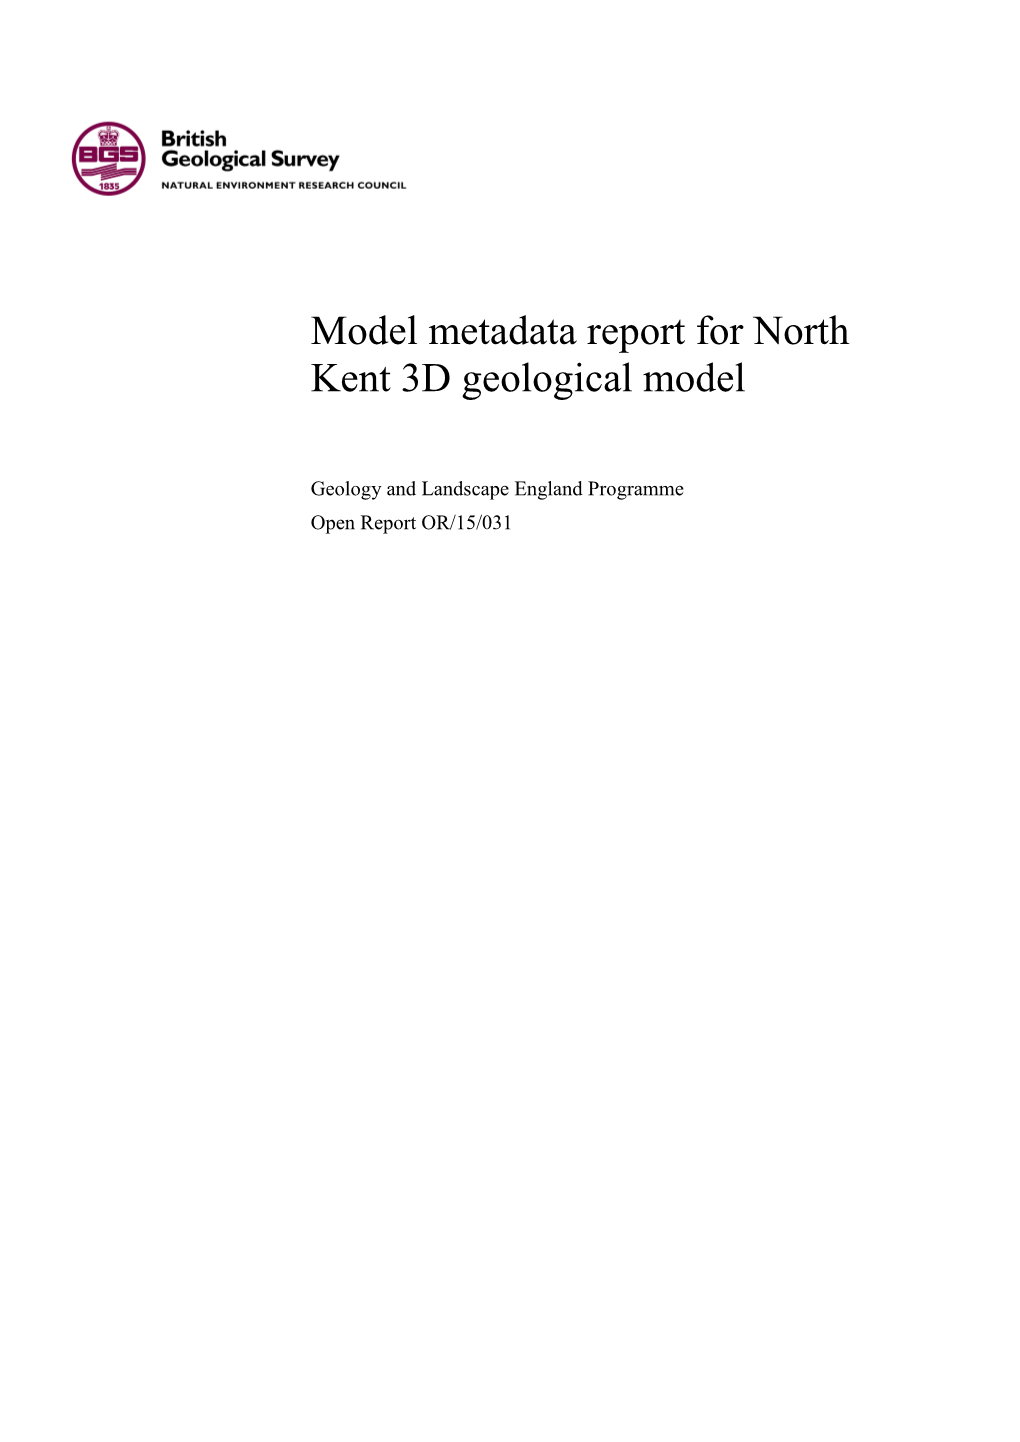 Model Metadata Report for North Kent 3D Geological Model